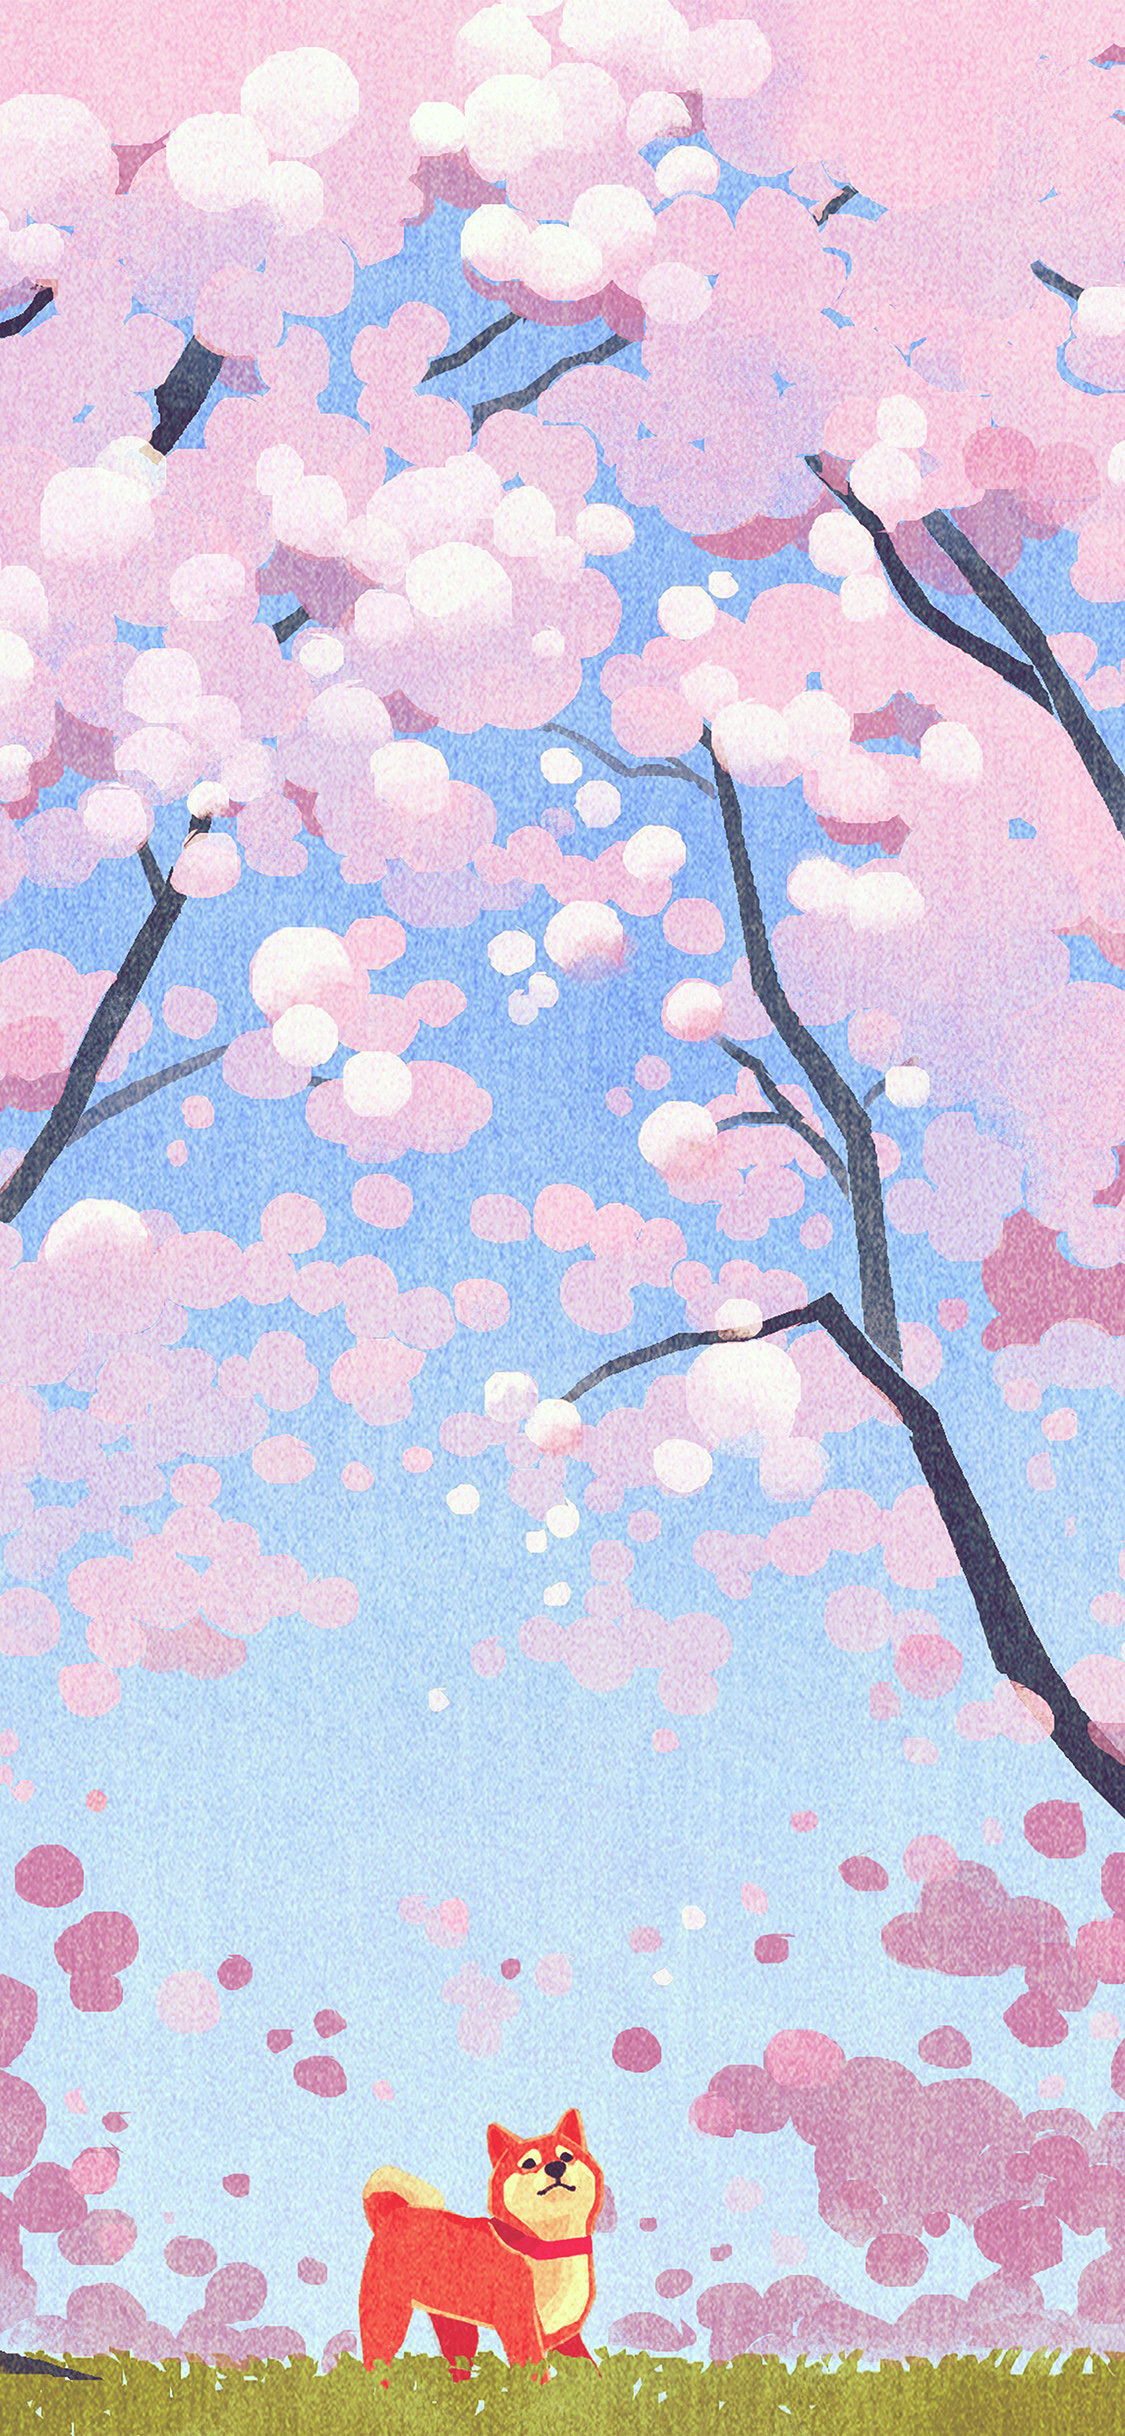 iPhone X wallpaper. cute siba dog animal spring illustration art pink